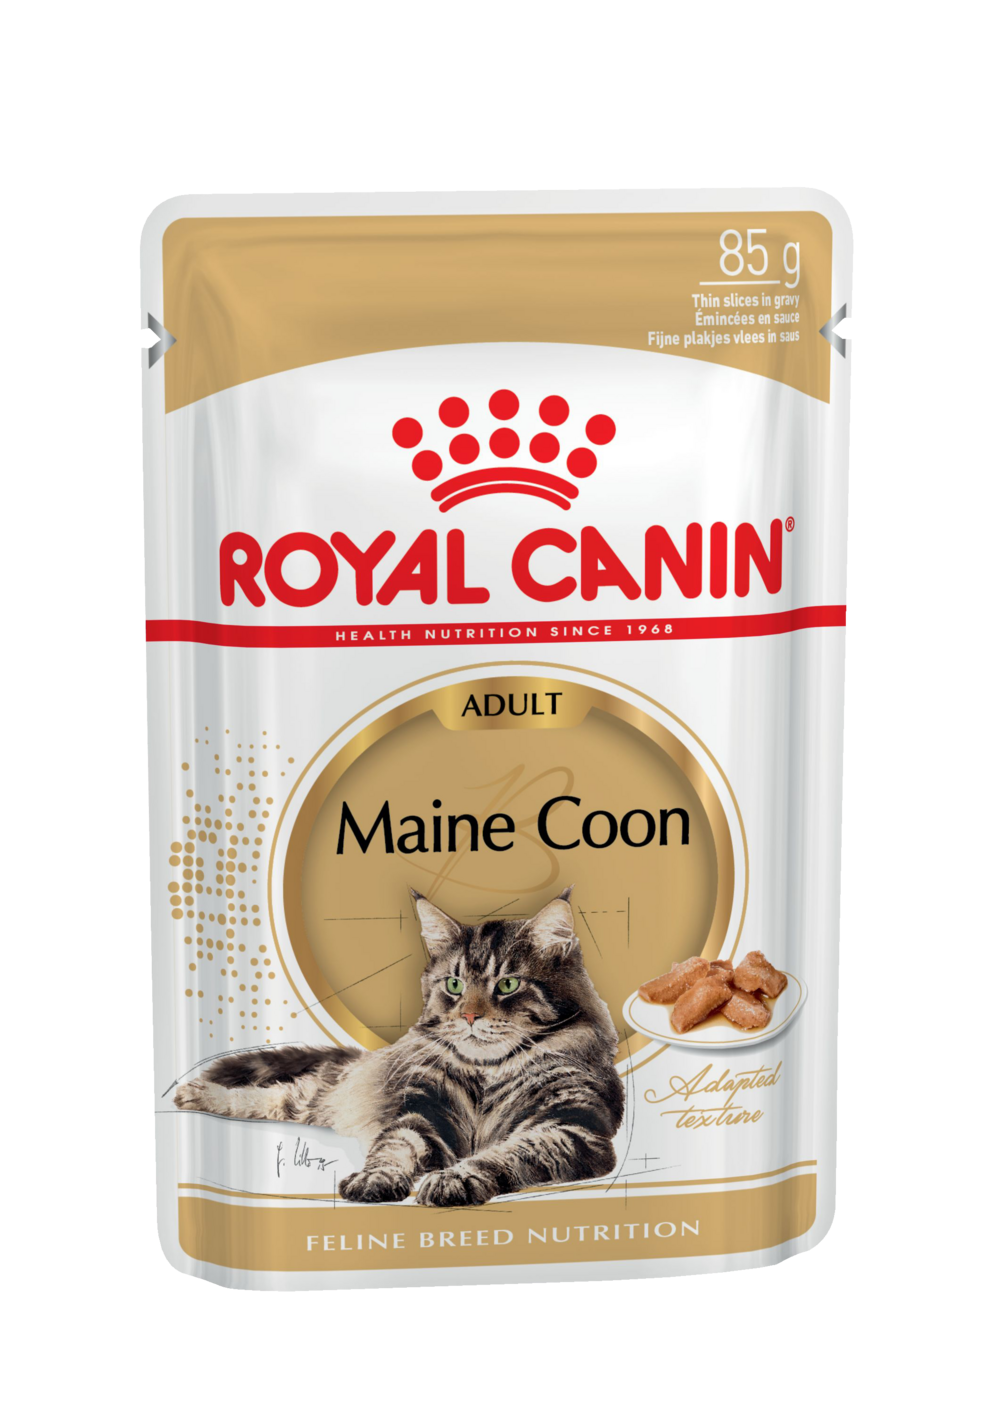 ROYAL CANIN MAINE COON ADULT 85 г пауч соус влажный корм для кошек породы мейн-кун старше 15 месяцев 1х24